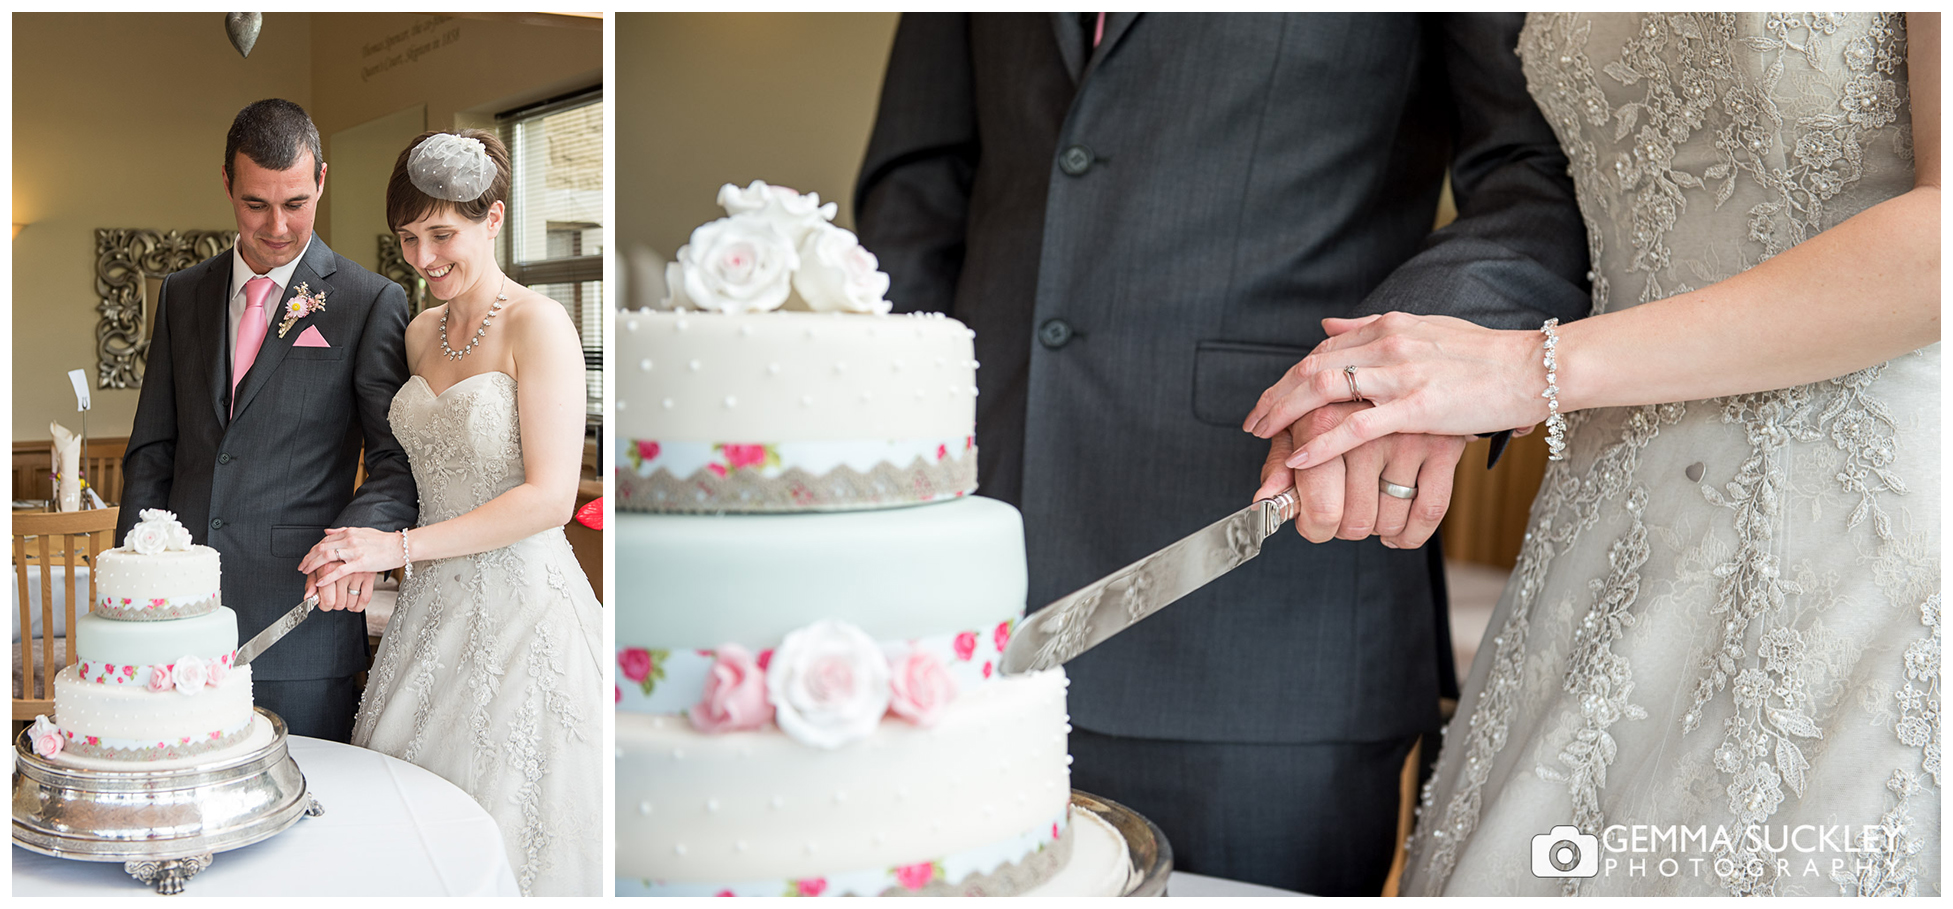 skipton-wedding-cakes.jpg